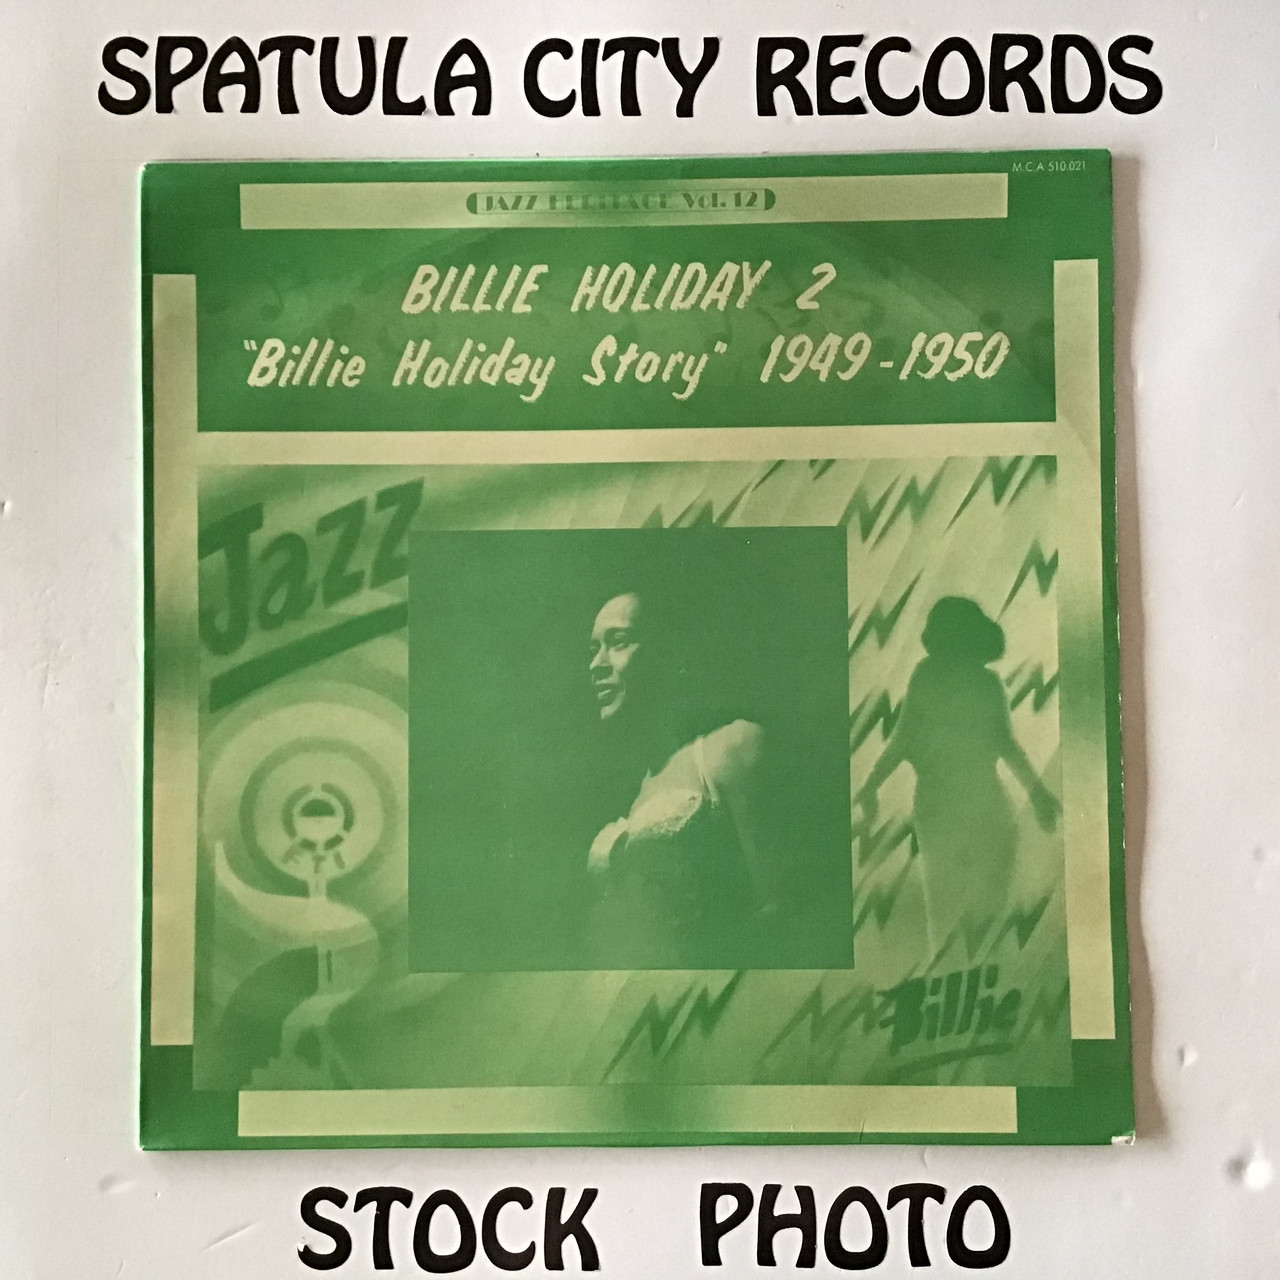 Billie Holiday - Billie Holiday Story 2 1949 - 1950 - IMPORT - vinyl record LP